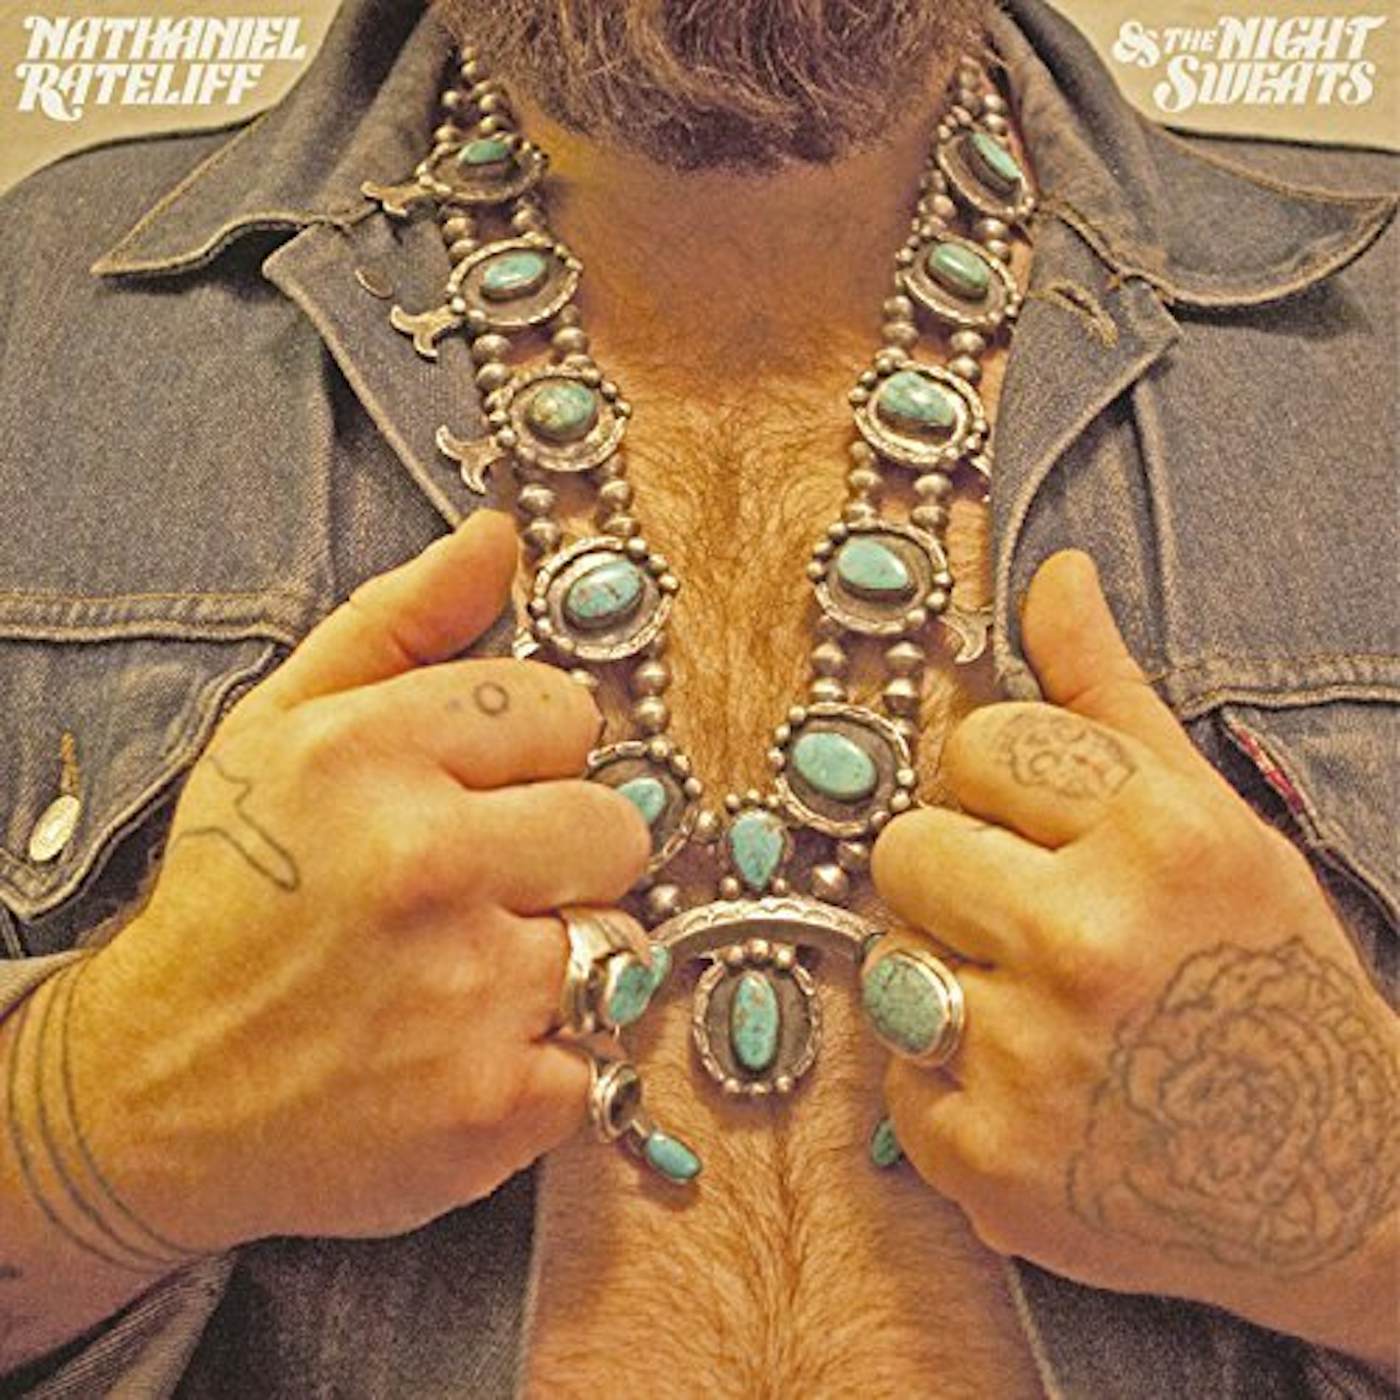 Nathaniel Rateliff & The Night Sweats Vinyl Record